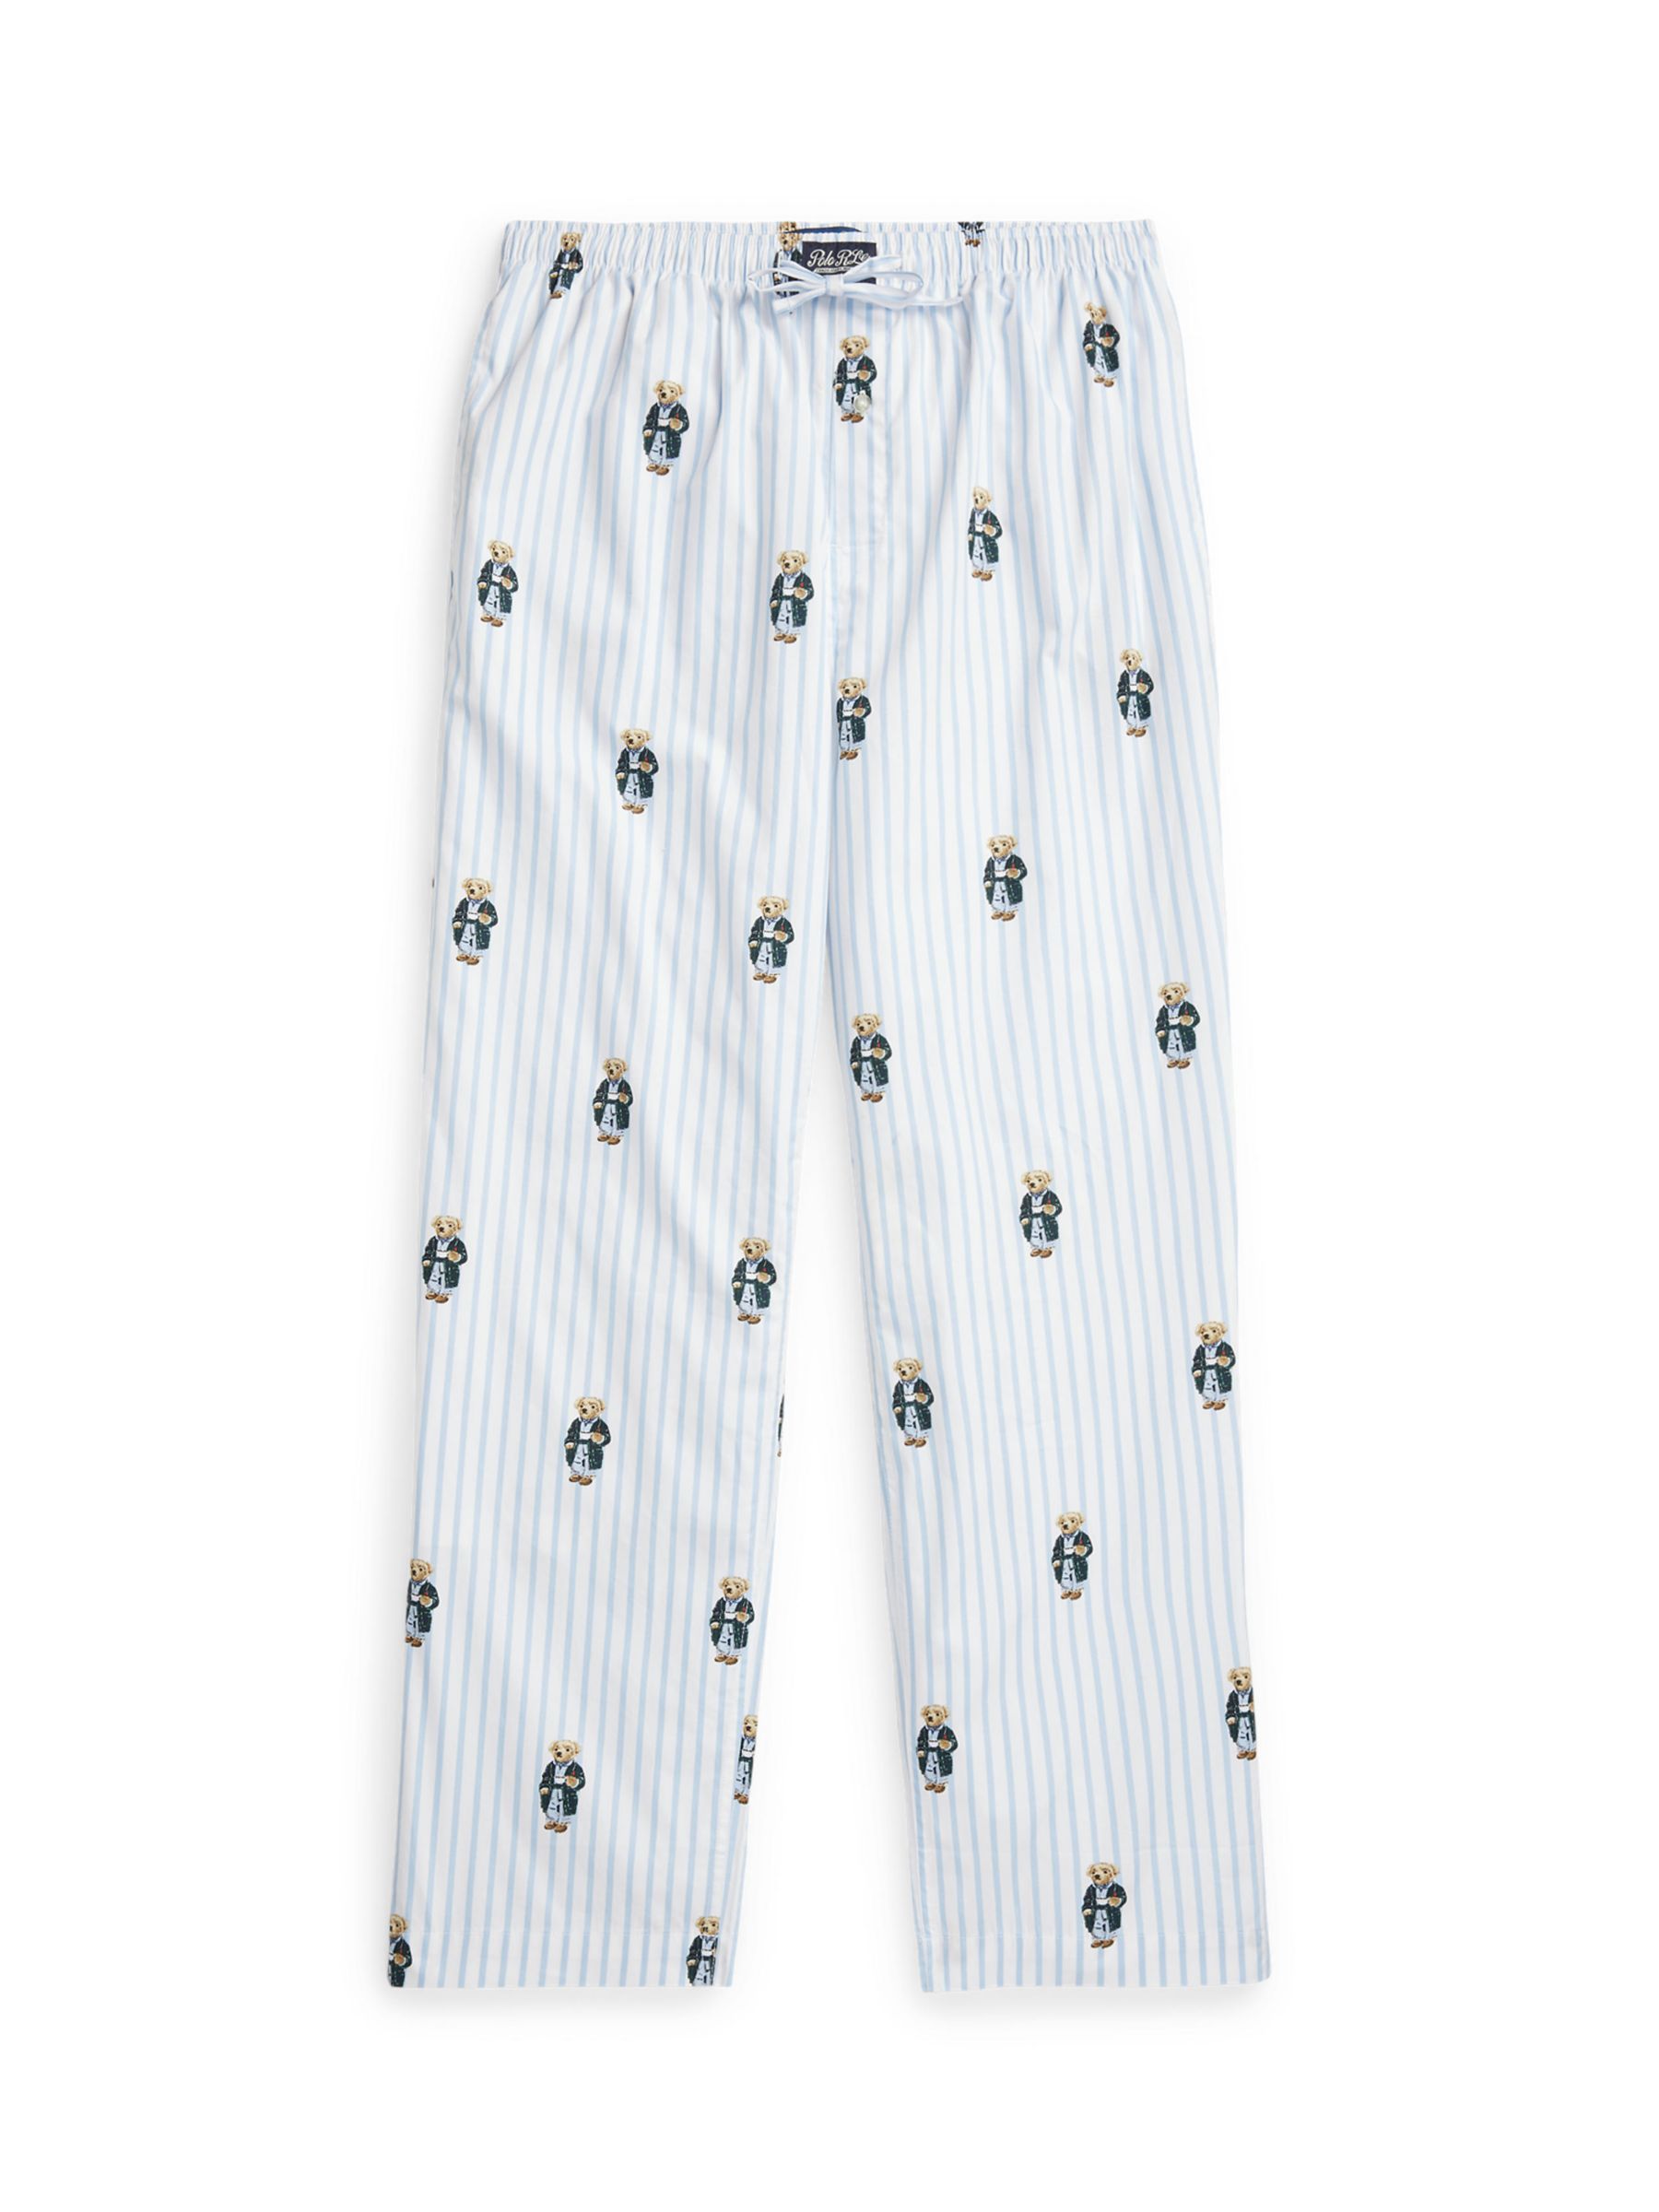 Polo Ralph Lauren Pajama Pants for Men for sale